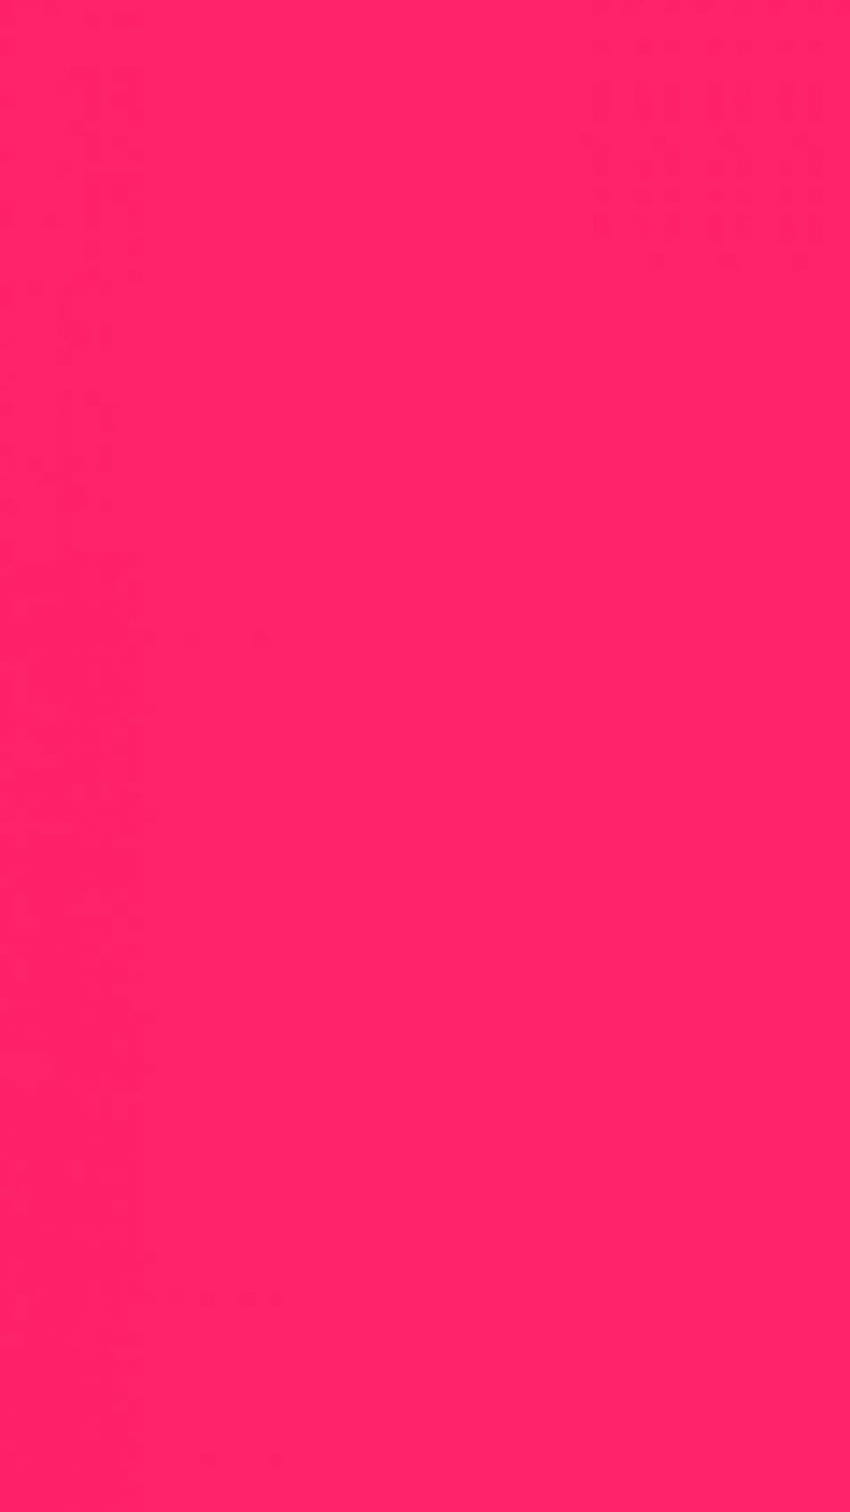 Latar Belakang Merah Muda Warna Polos, Merah Muda Pastel Solid wallpaper ponsel HD